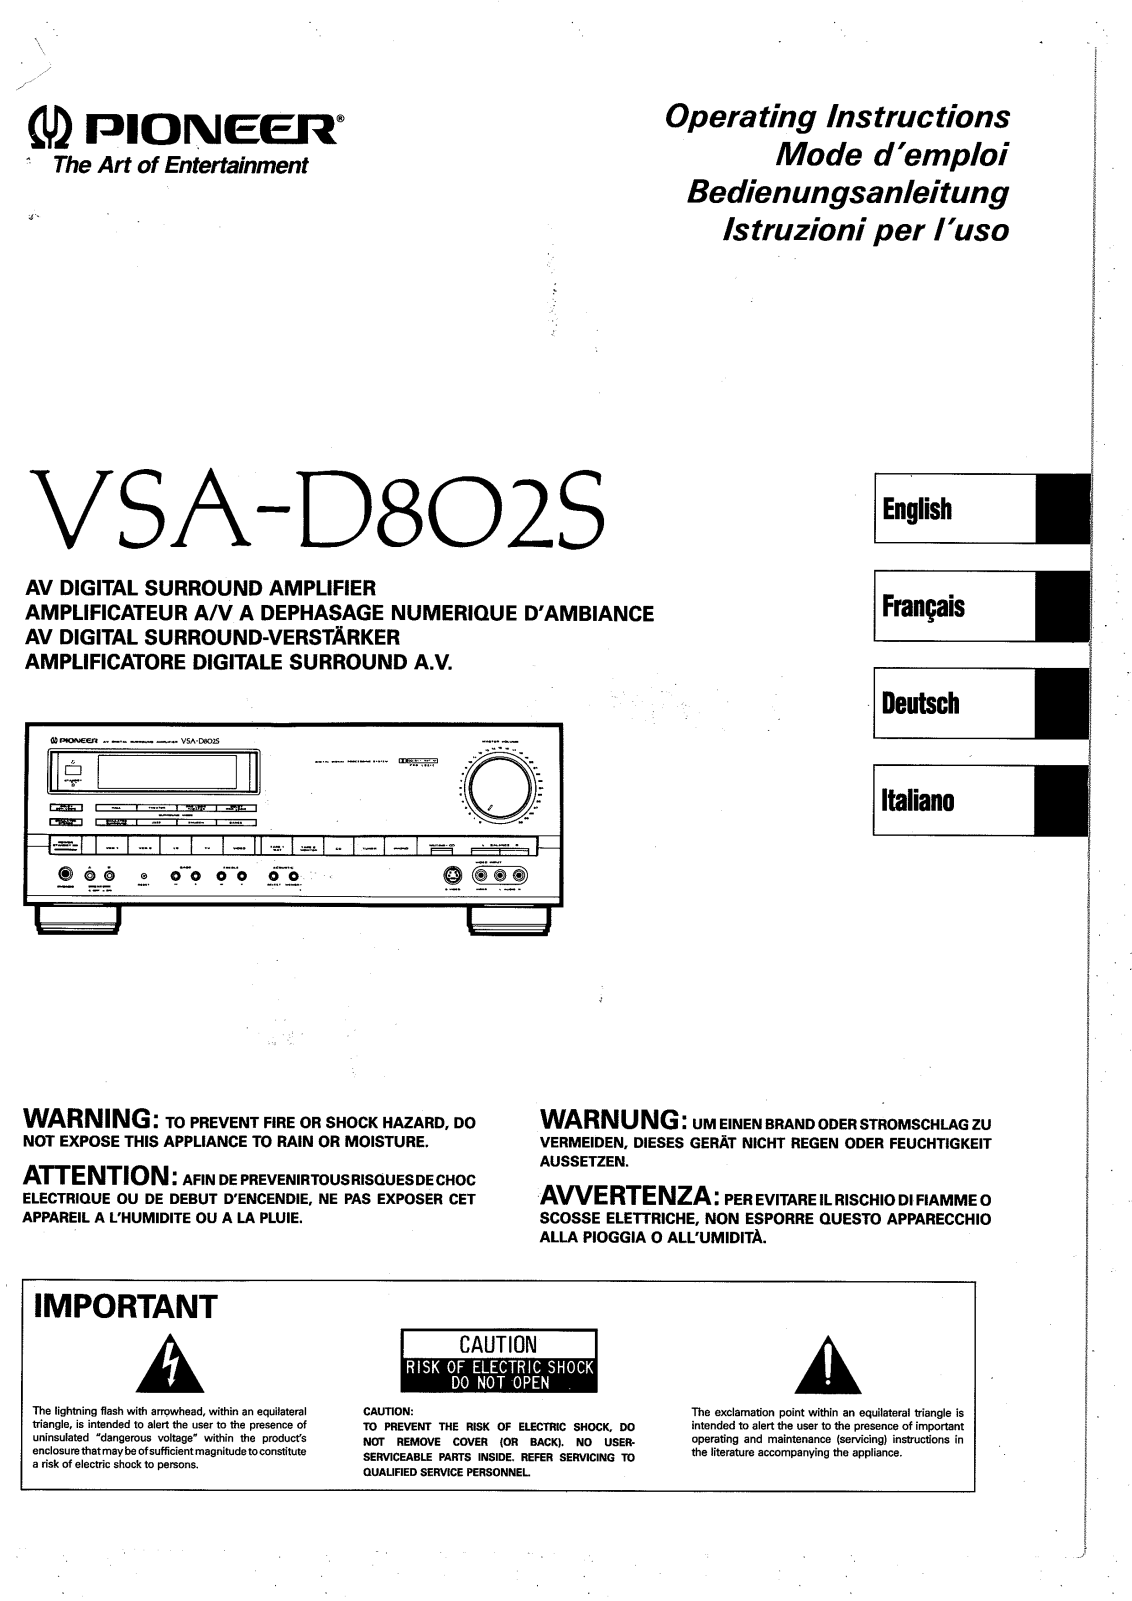 Pioneer VSA-D802S Manual